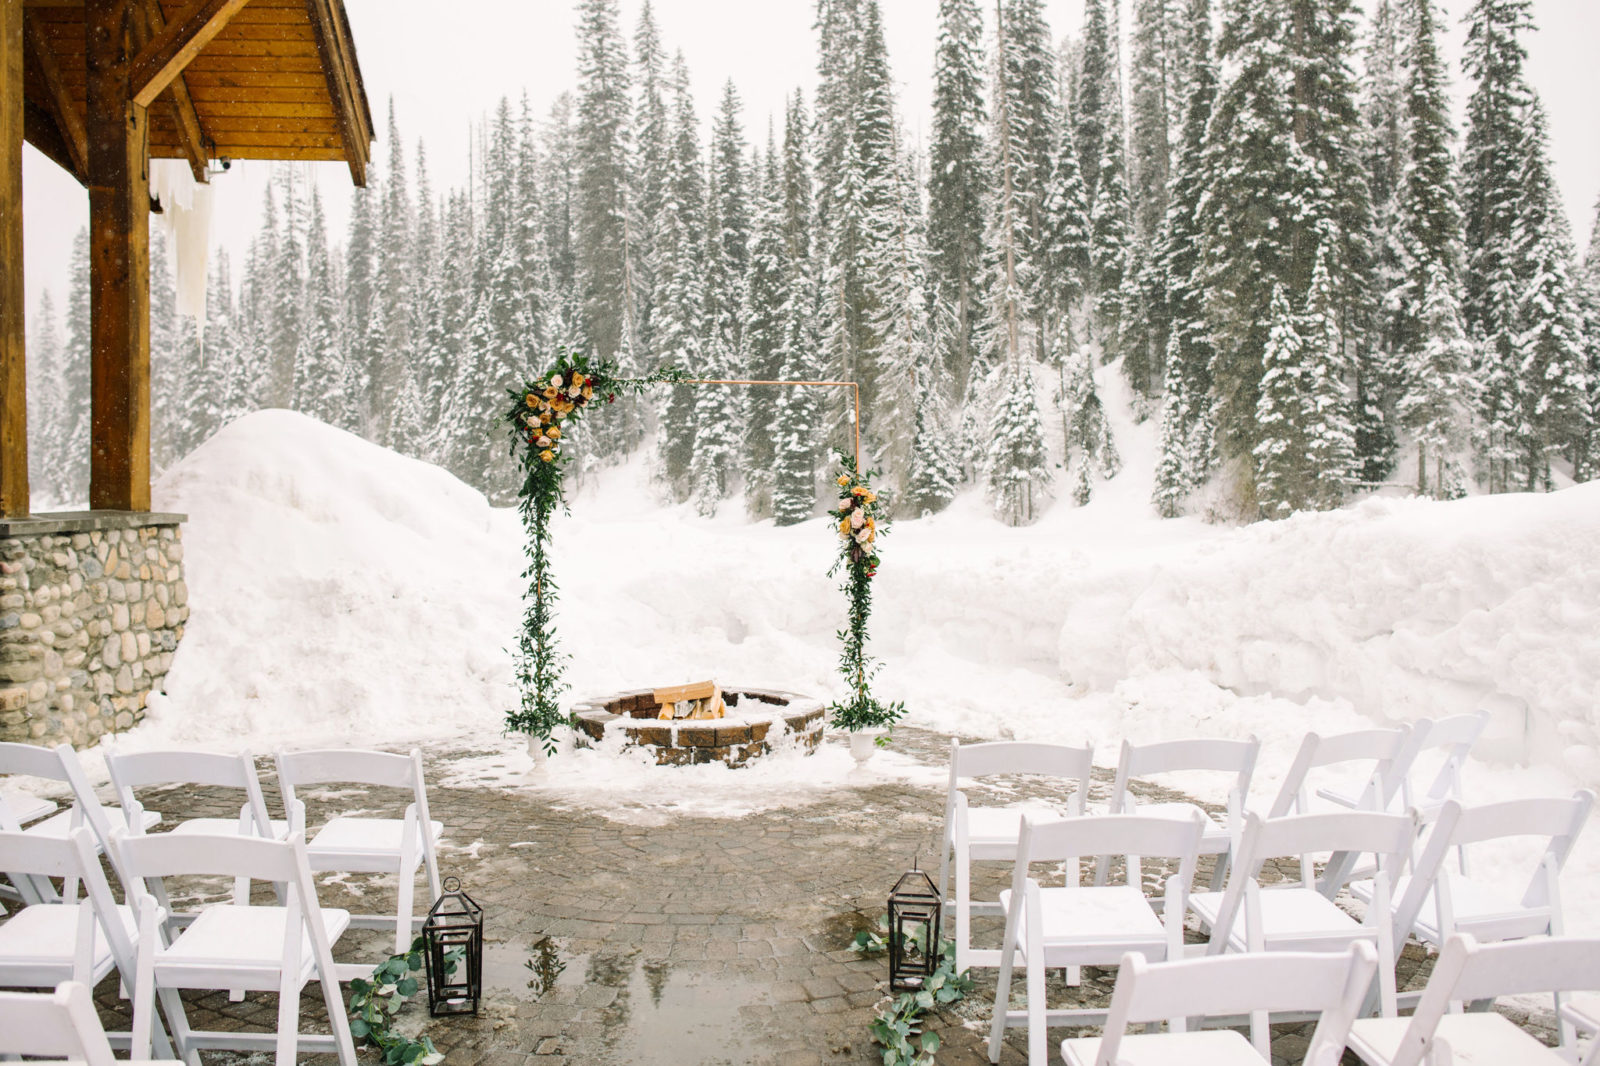 Bold and bright winter wonderland inspired wedding ceremony design at Emerald Lake Lodge